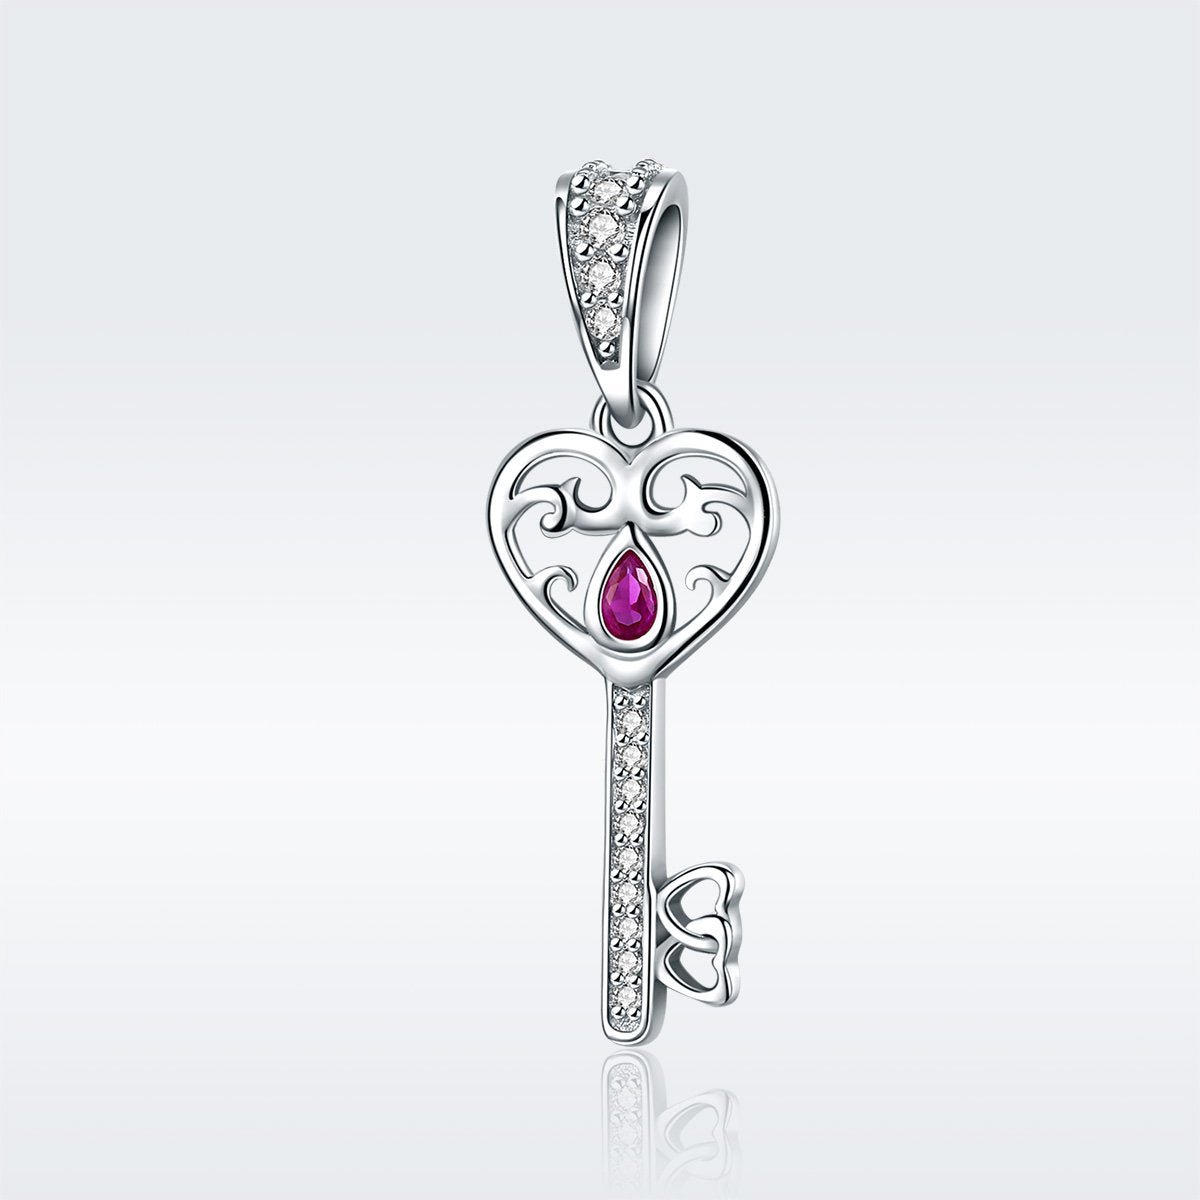 Sterling 925 silver charm the heart key pendant fits Pandora charm and European charm bracelet Xaxe.com